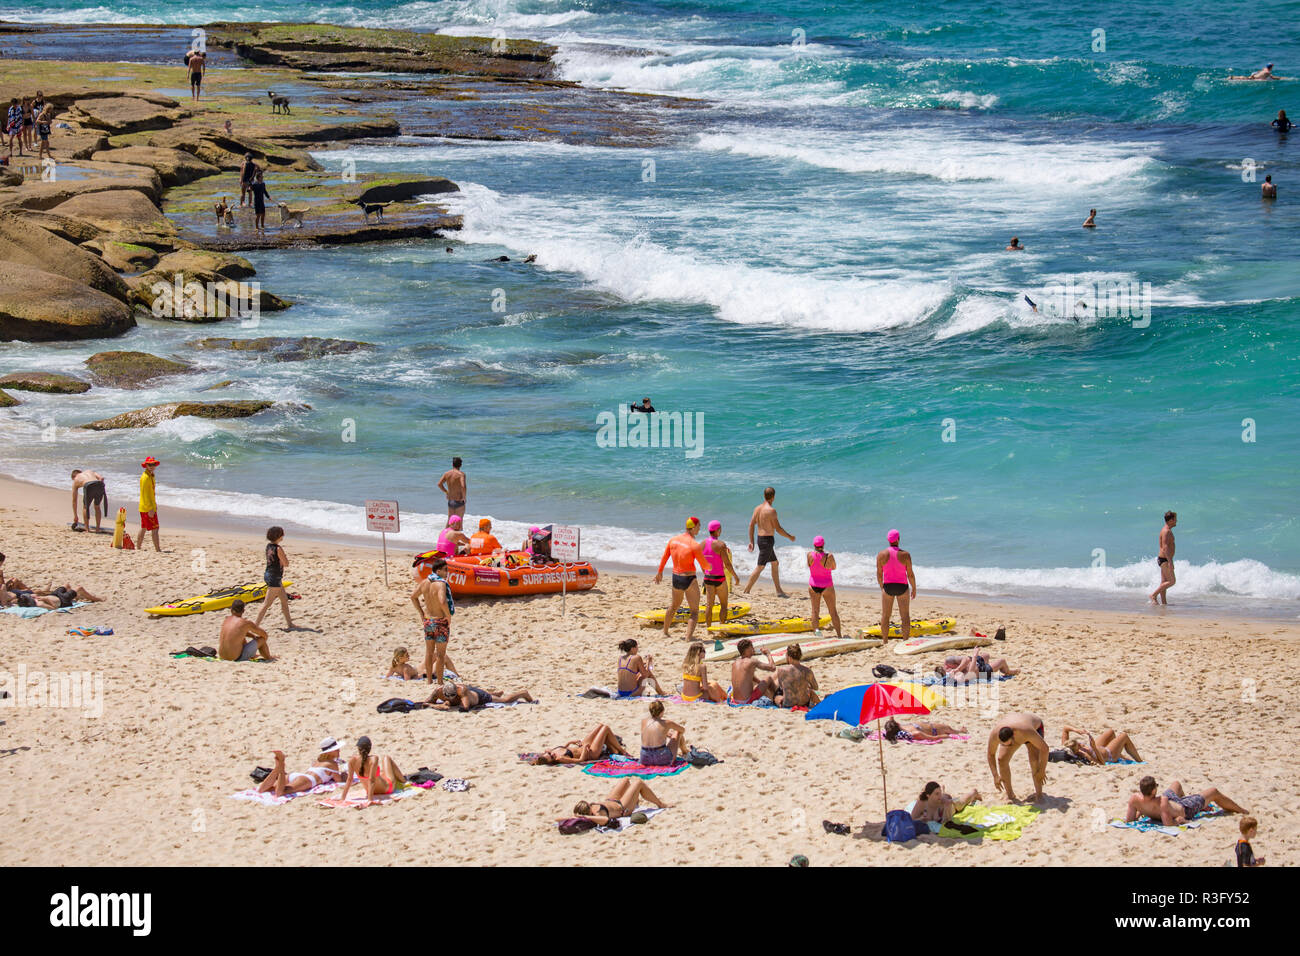 Volunteer surf rescue lifeguards on patrol on Tamarama beach in Sydney eastern suburbs,New South Wales,Australia Stock Photo